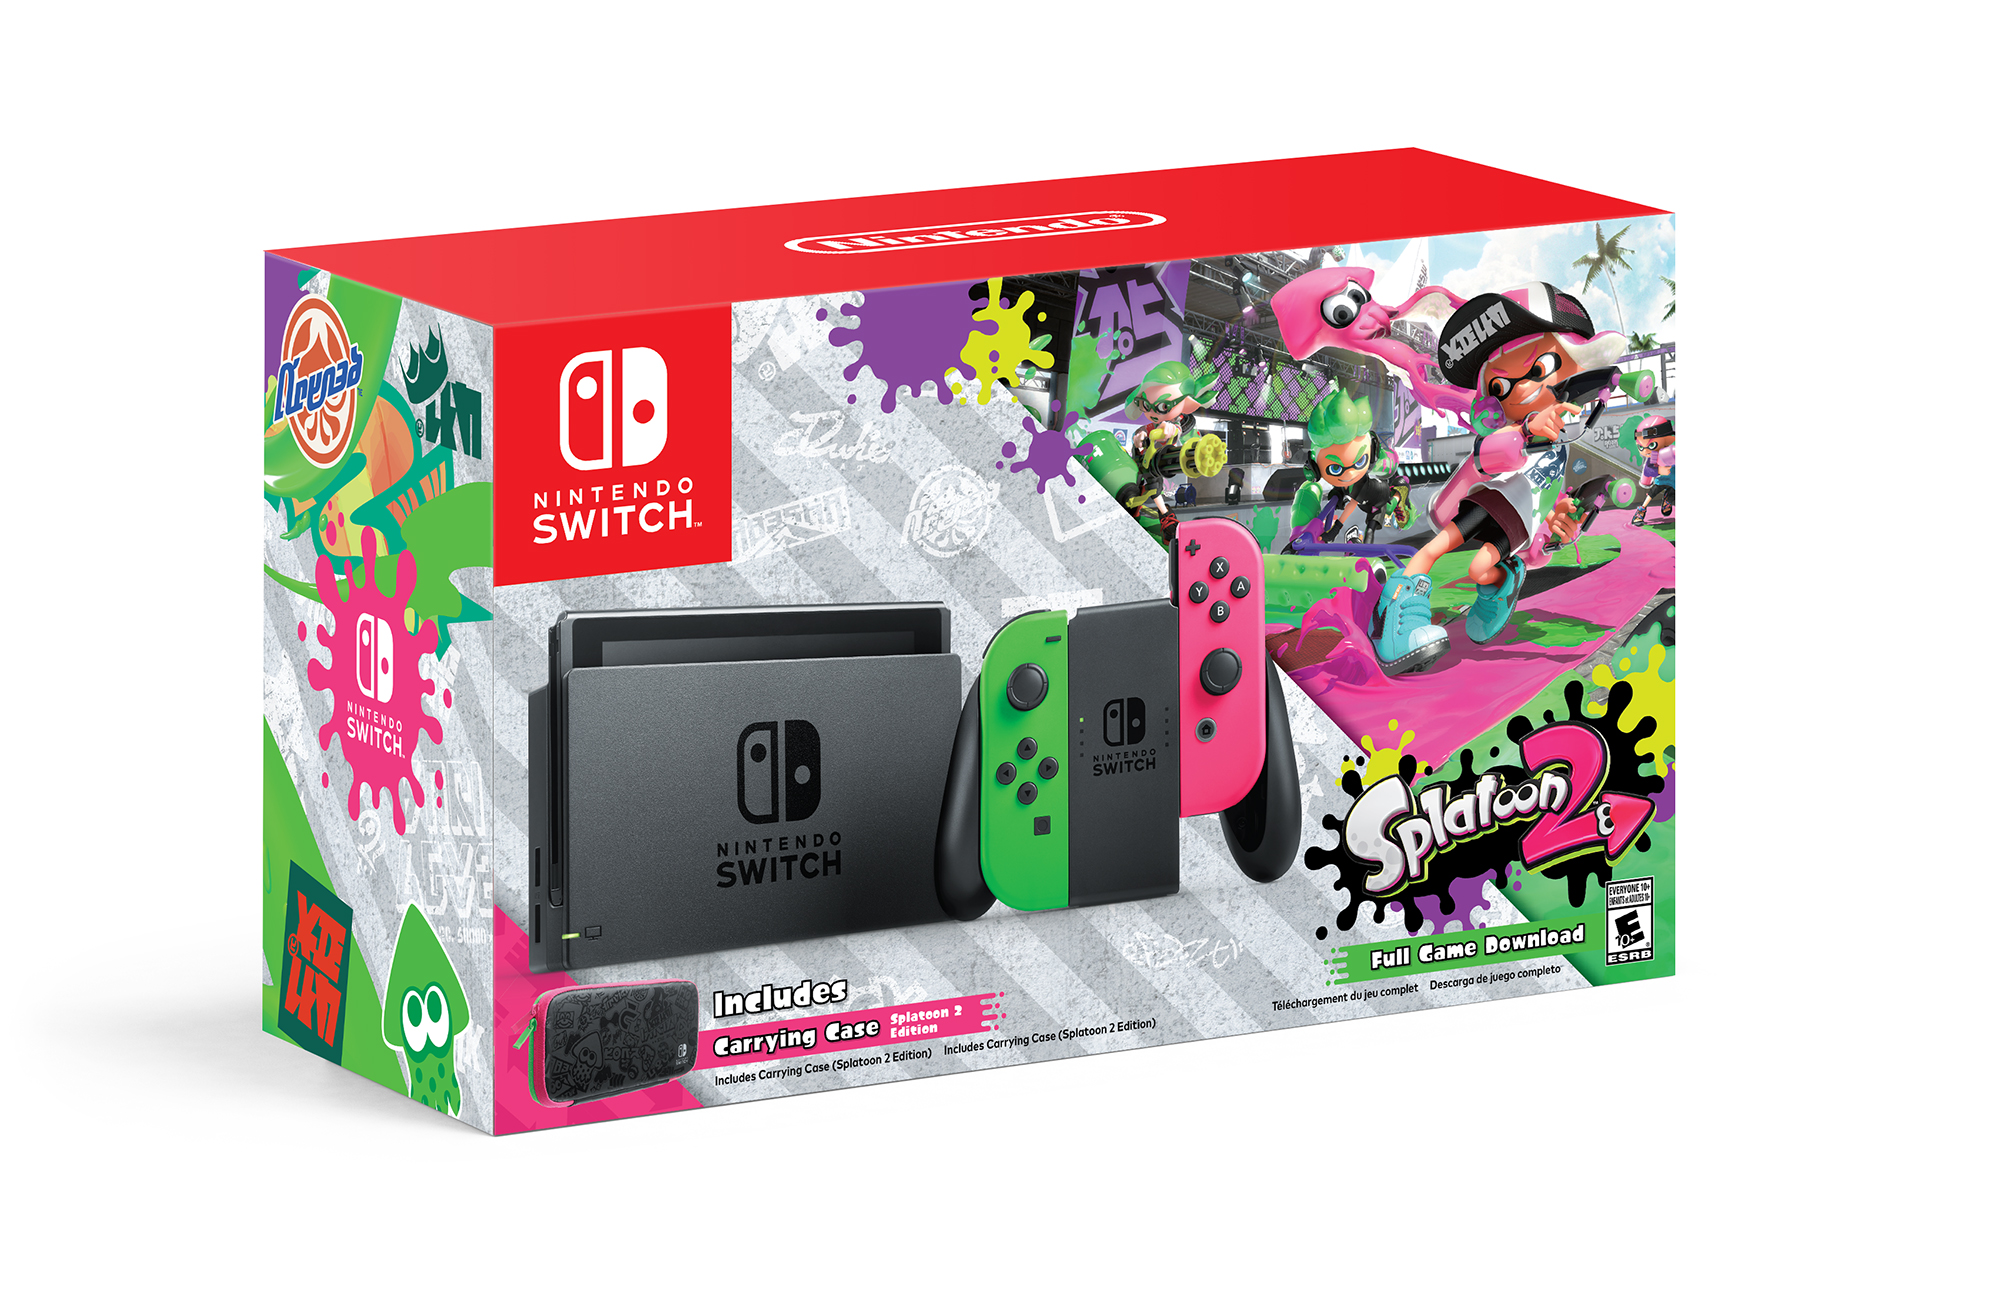 Nintendo Switch Hardware with Splatoon 2 + Neon Green/Neon Pink Joy-Cons (Nintendo Switch) - image 1 of 11